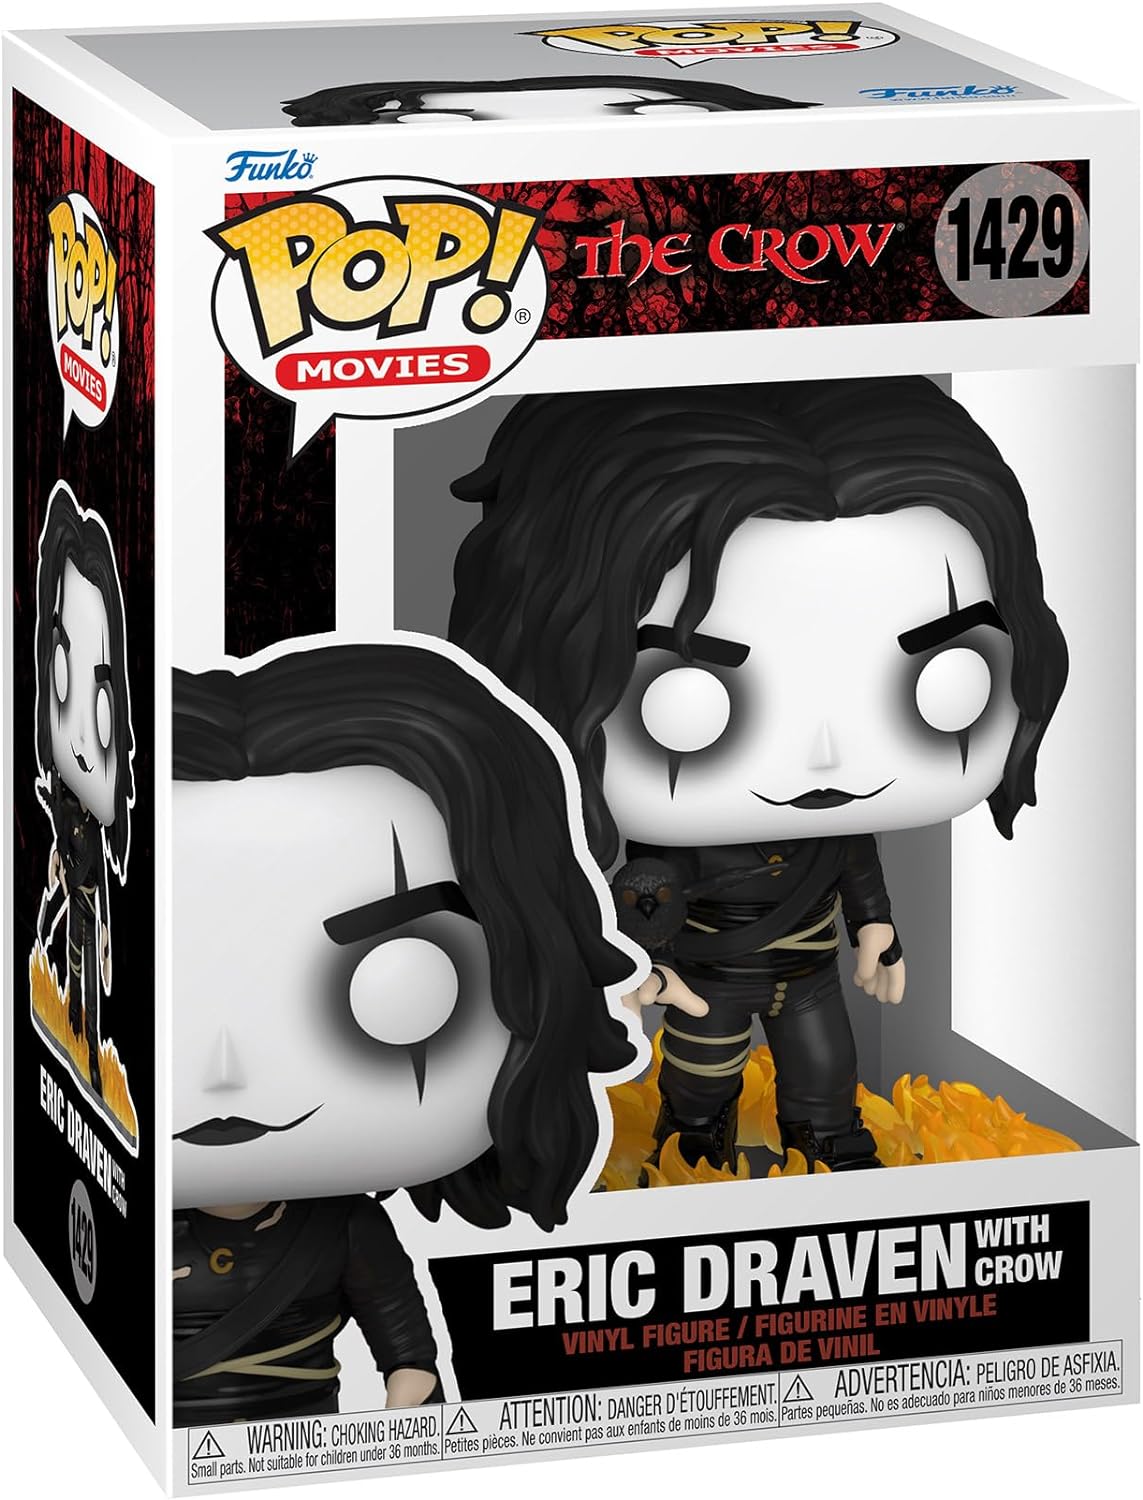 1 PC Funko Pop Funko Pop! Movies The Crow Eric Draven with Crow